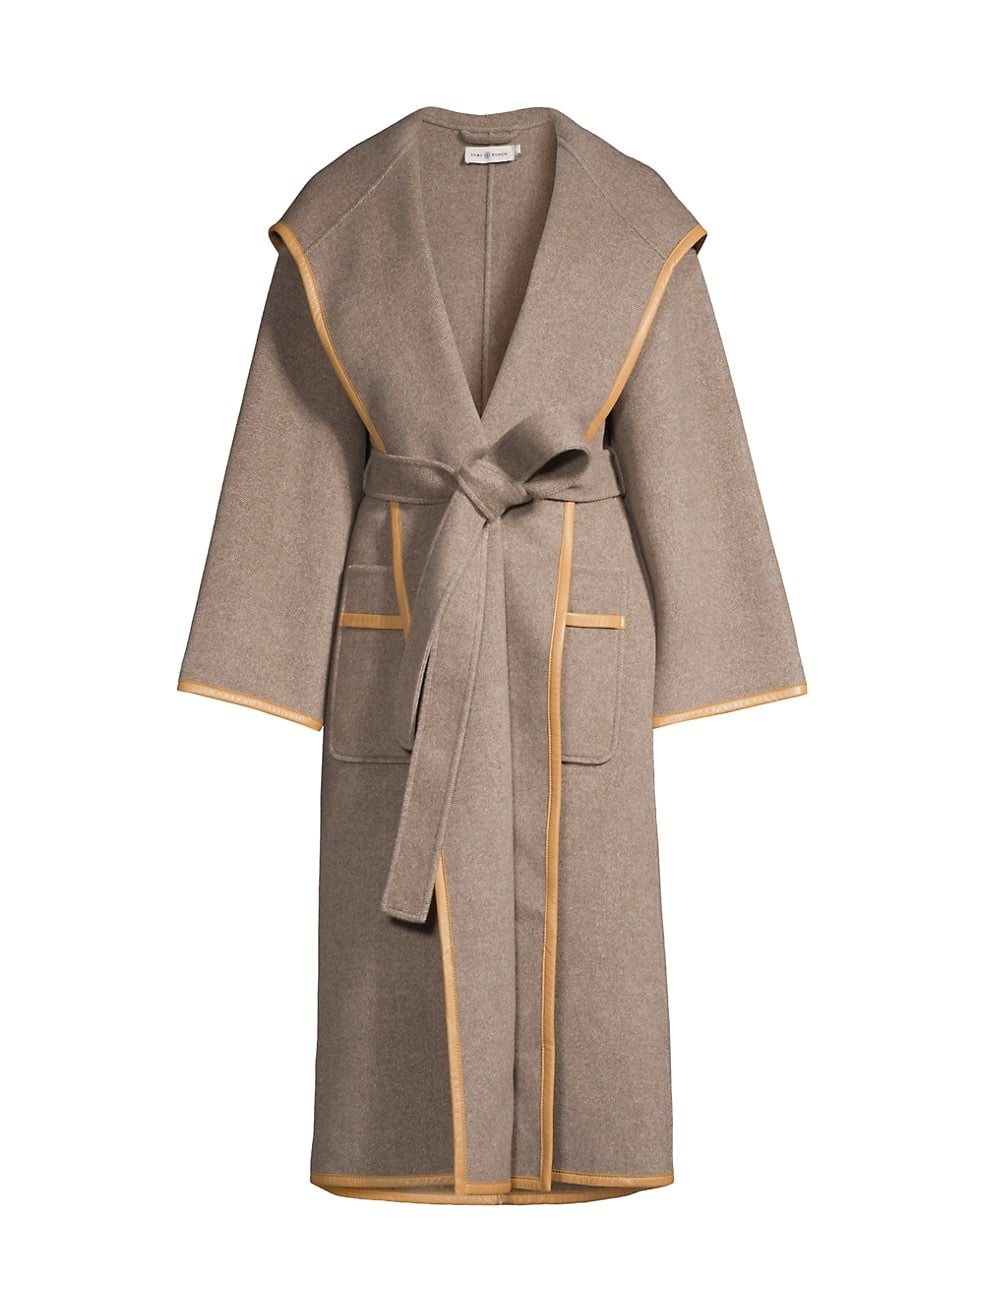 Coat sale - new arrivals - elegant wrap coat - fashion - sales - saks fifth avenue